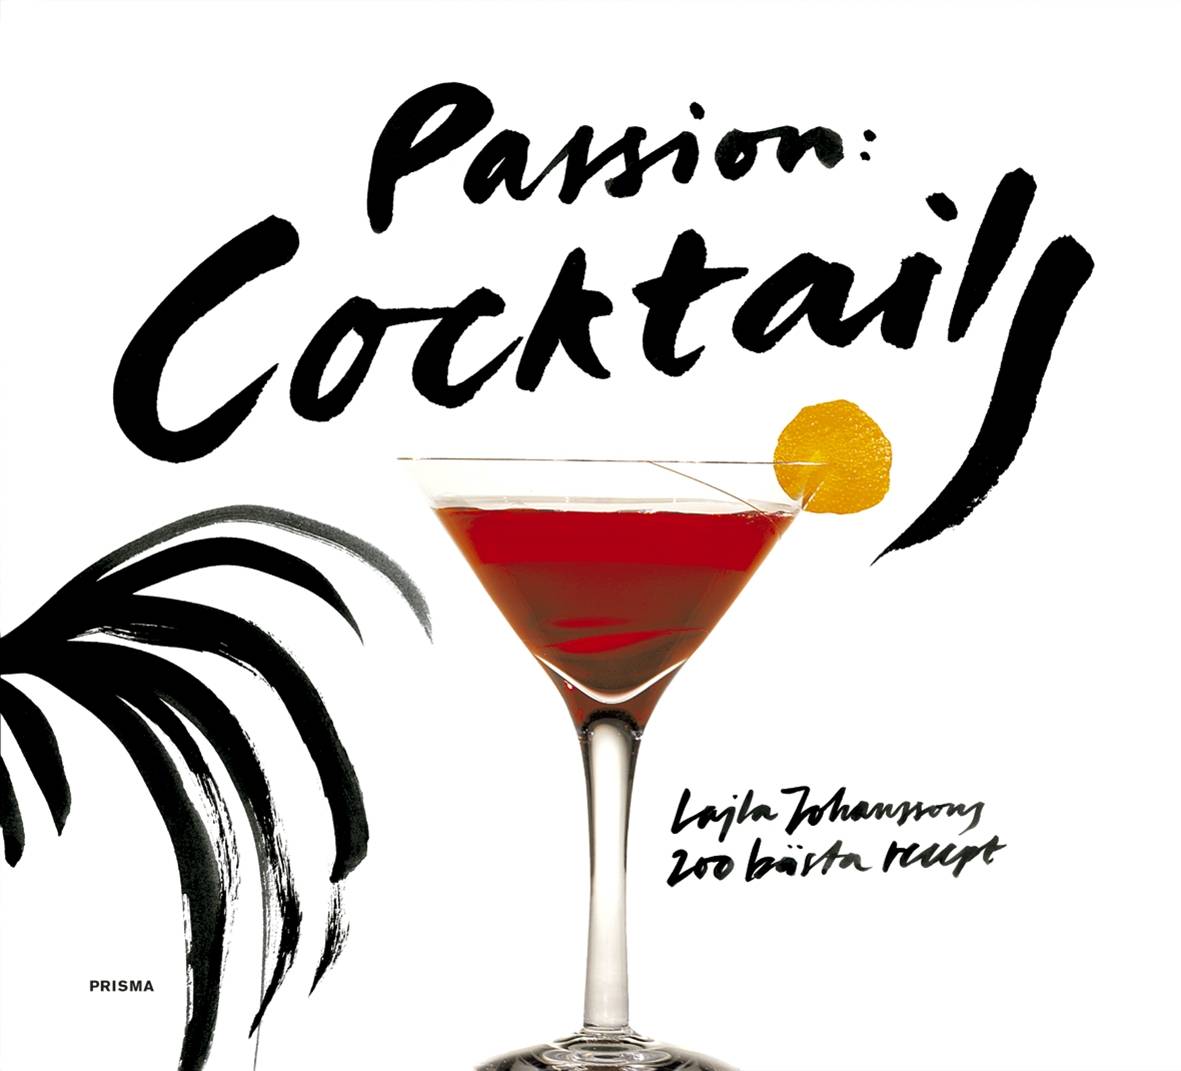 Passion: Cocktails : Lajla Johanssons 200 bästa recept